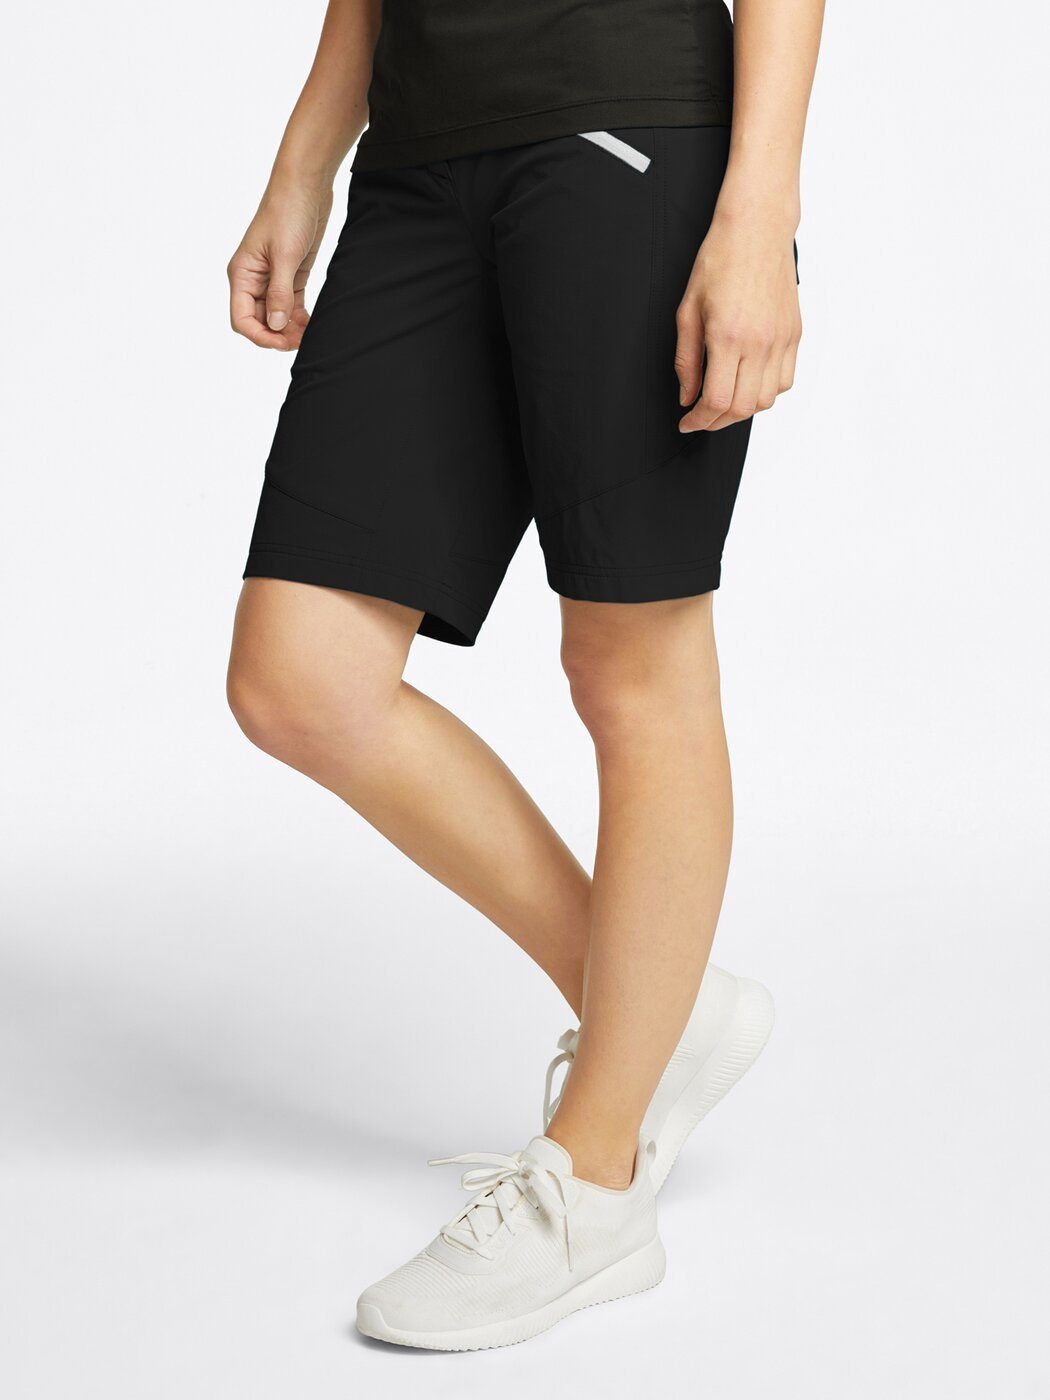 Shorts lady 1201 X-Function Ziener black.white (shorts) NASITA